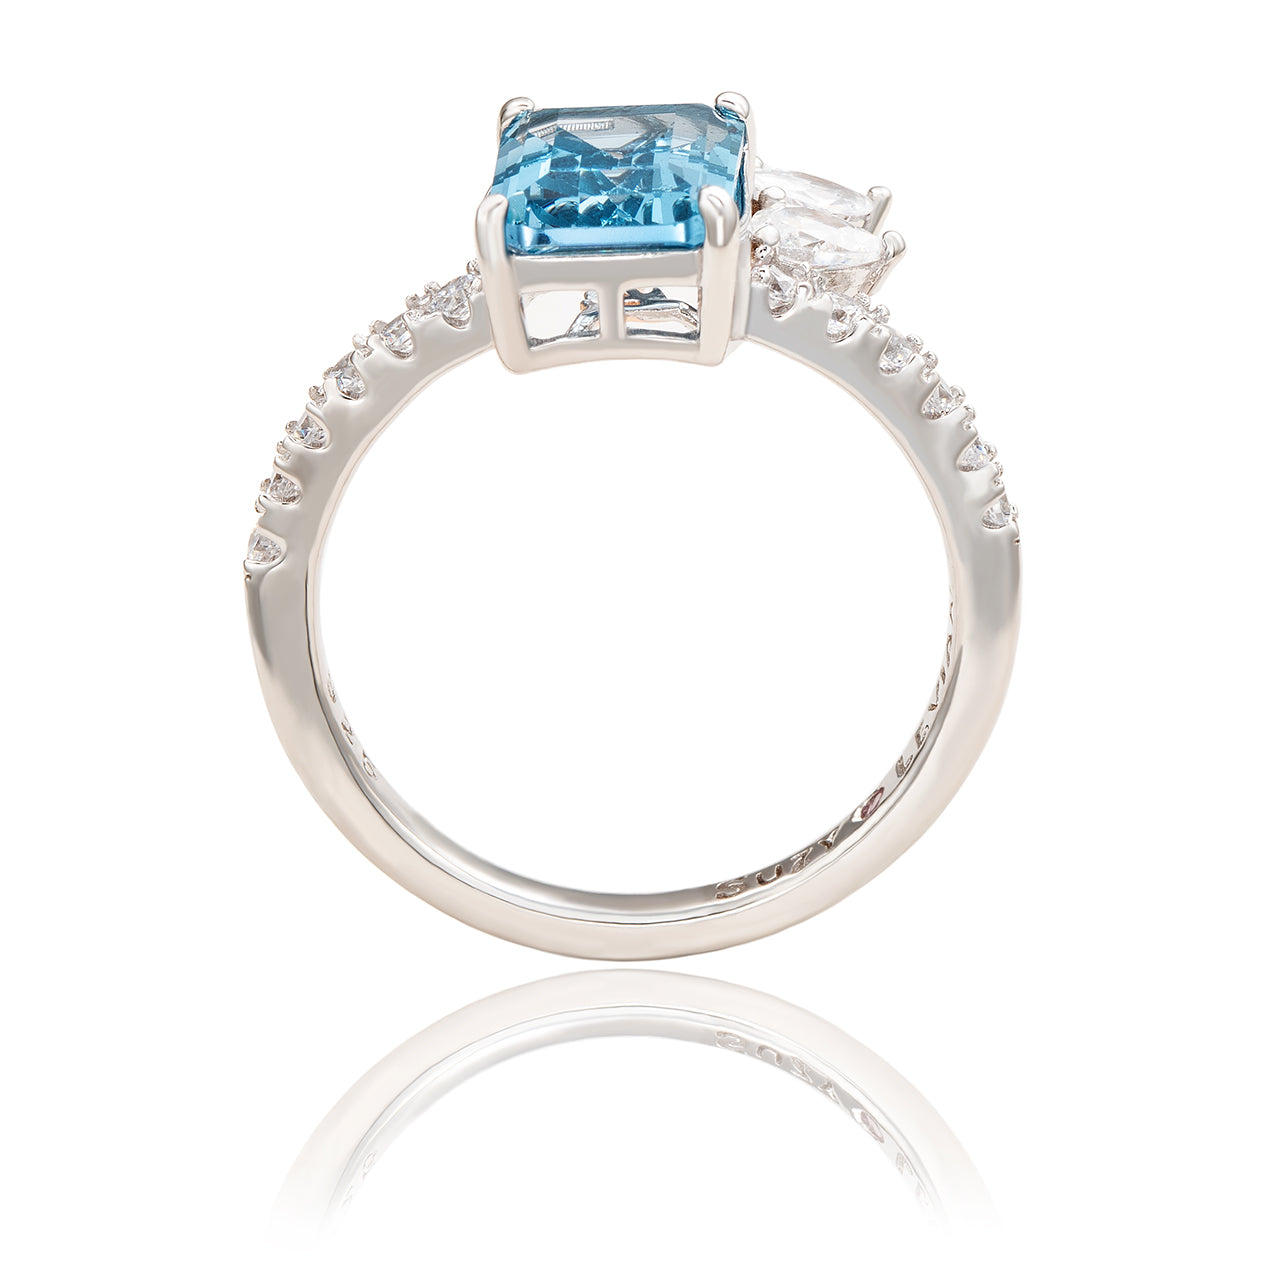 Suzy Levian Sterling Silver Aqua & White Cubic Zirconia Ring